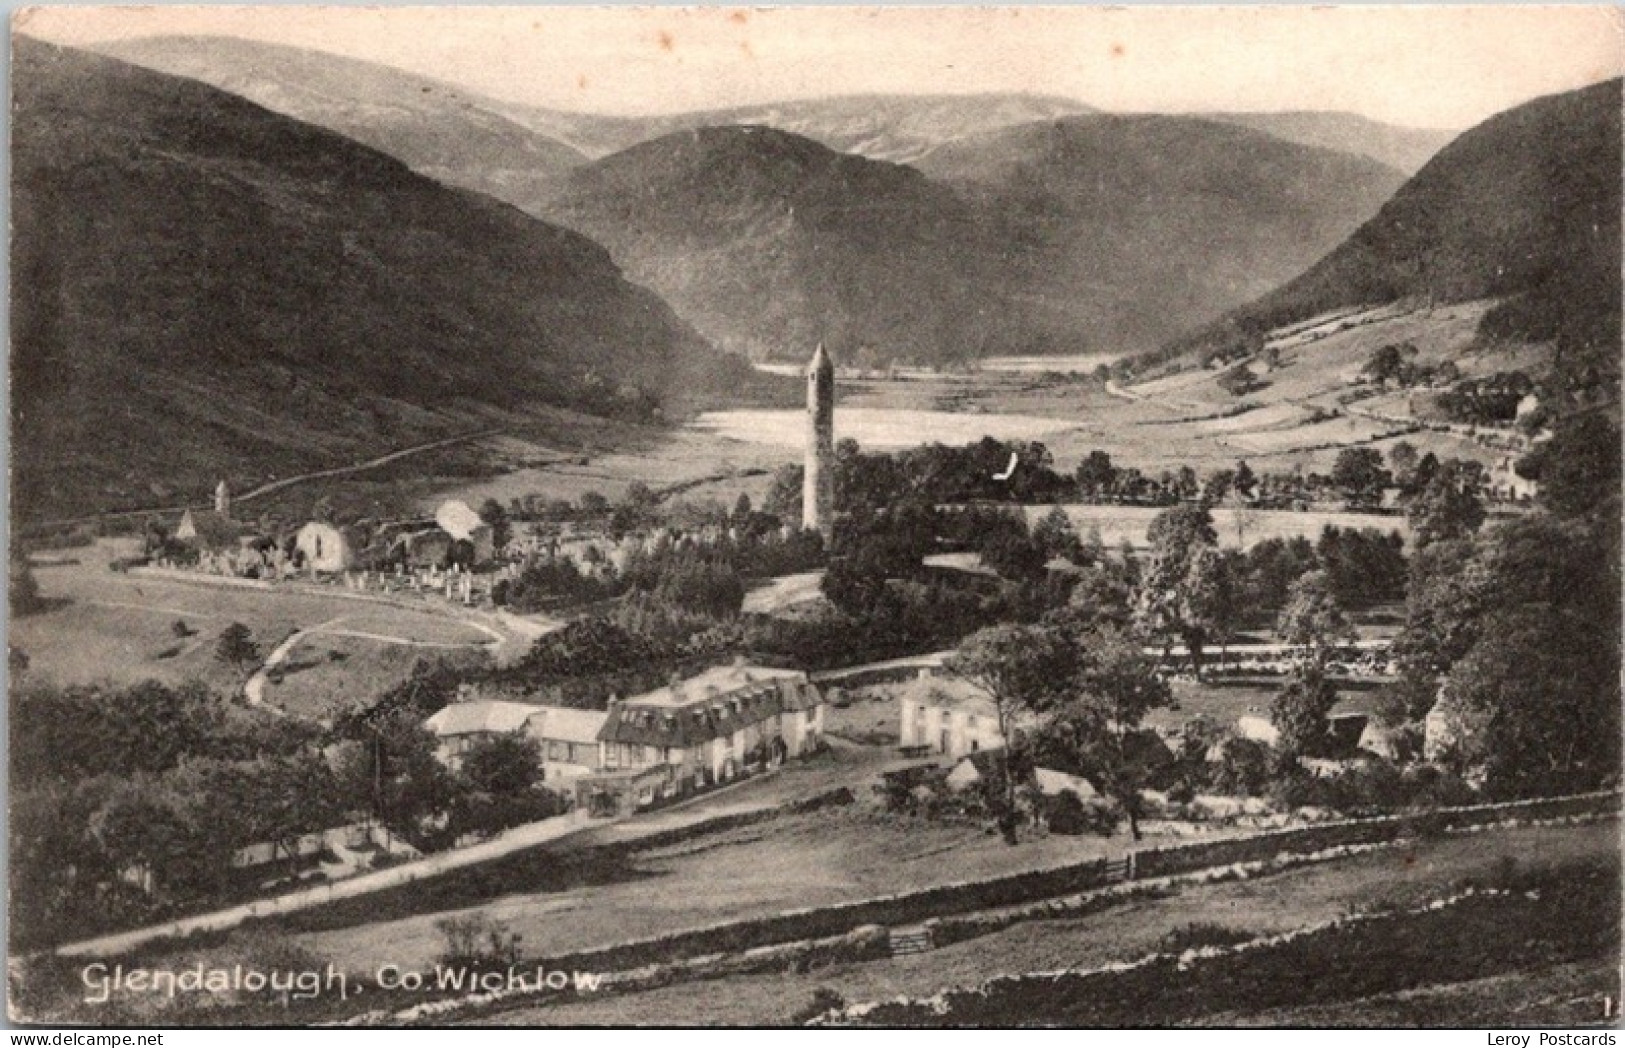 Glendalough, Co. Wicklow, Ireland - Wicklow